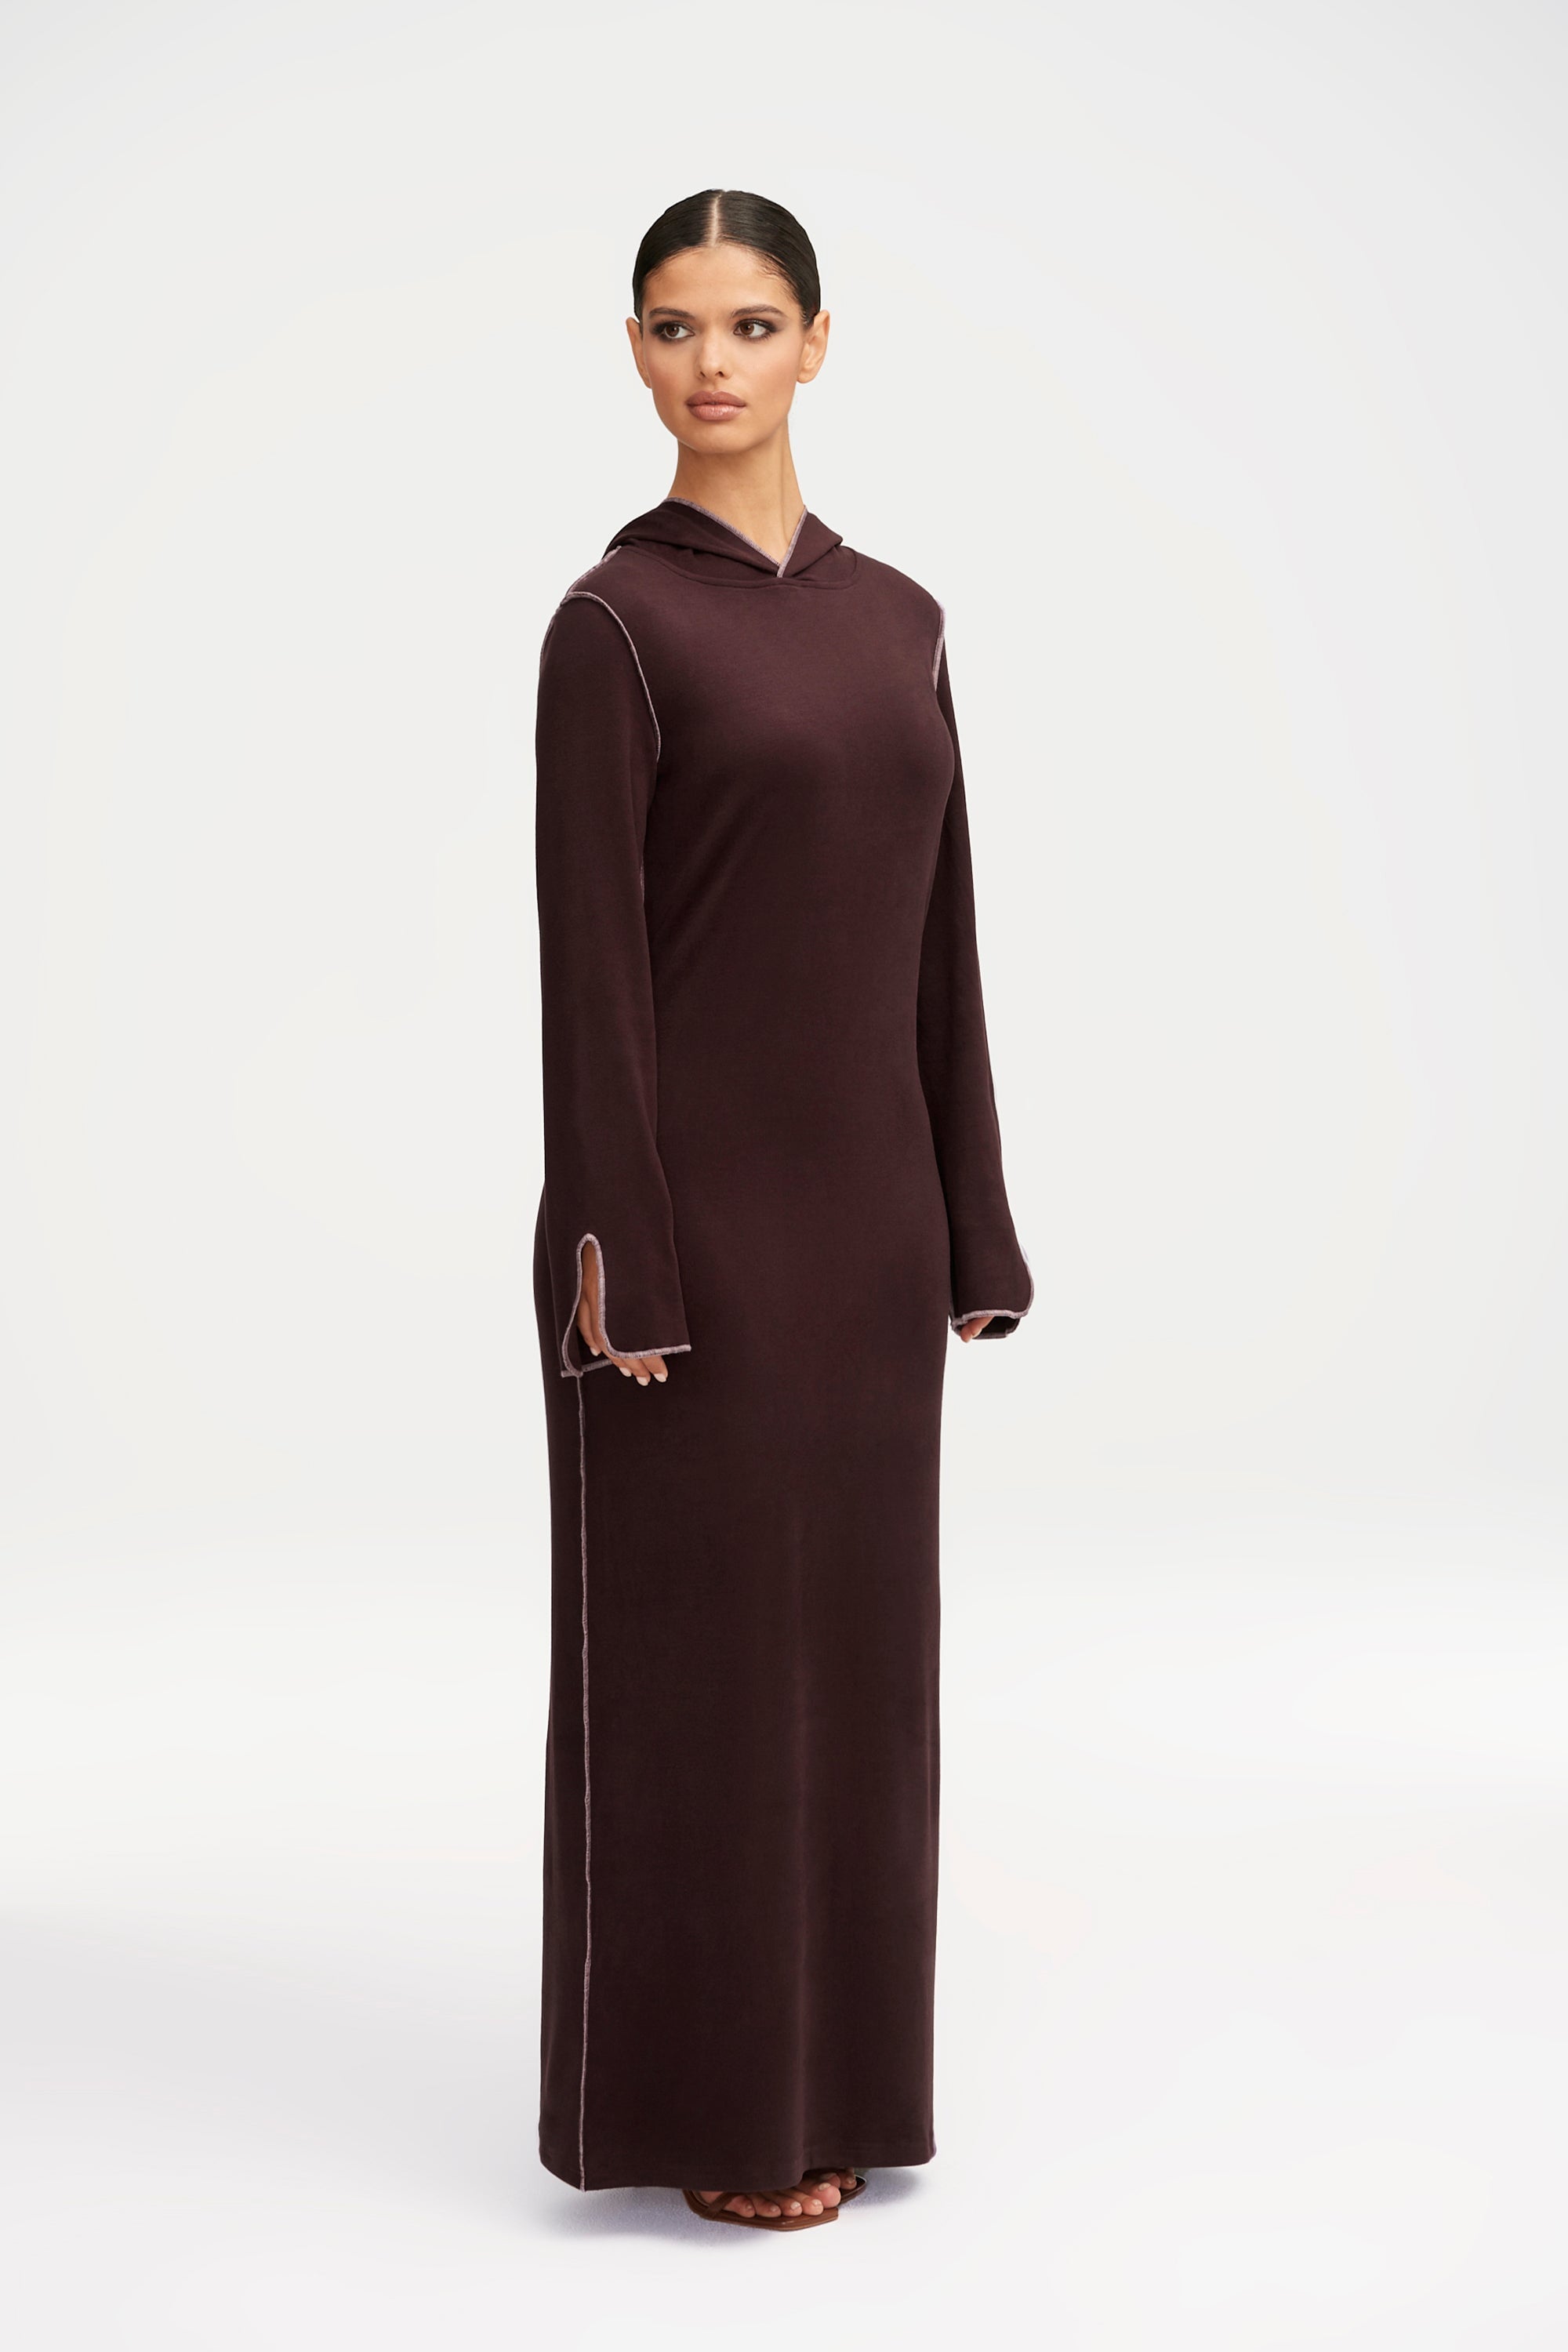 Ava Sweater Hoodie Maxi Dress - Chocolate Clothing saigonodysseyhotel 